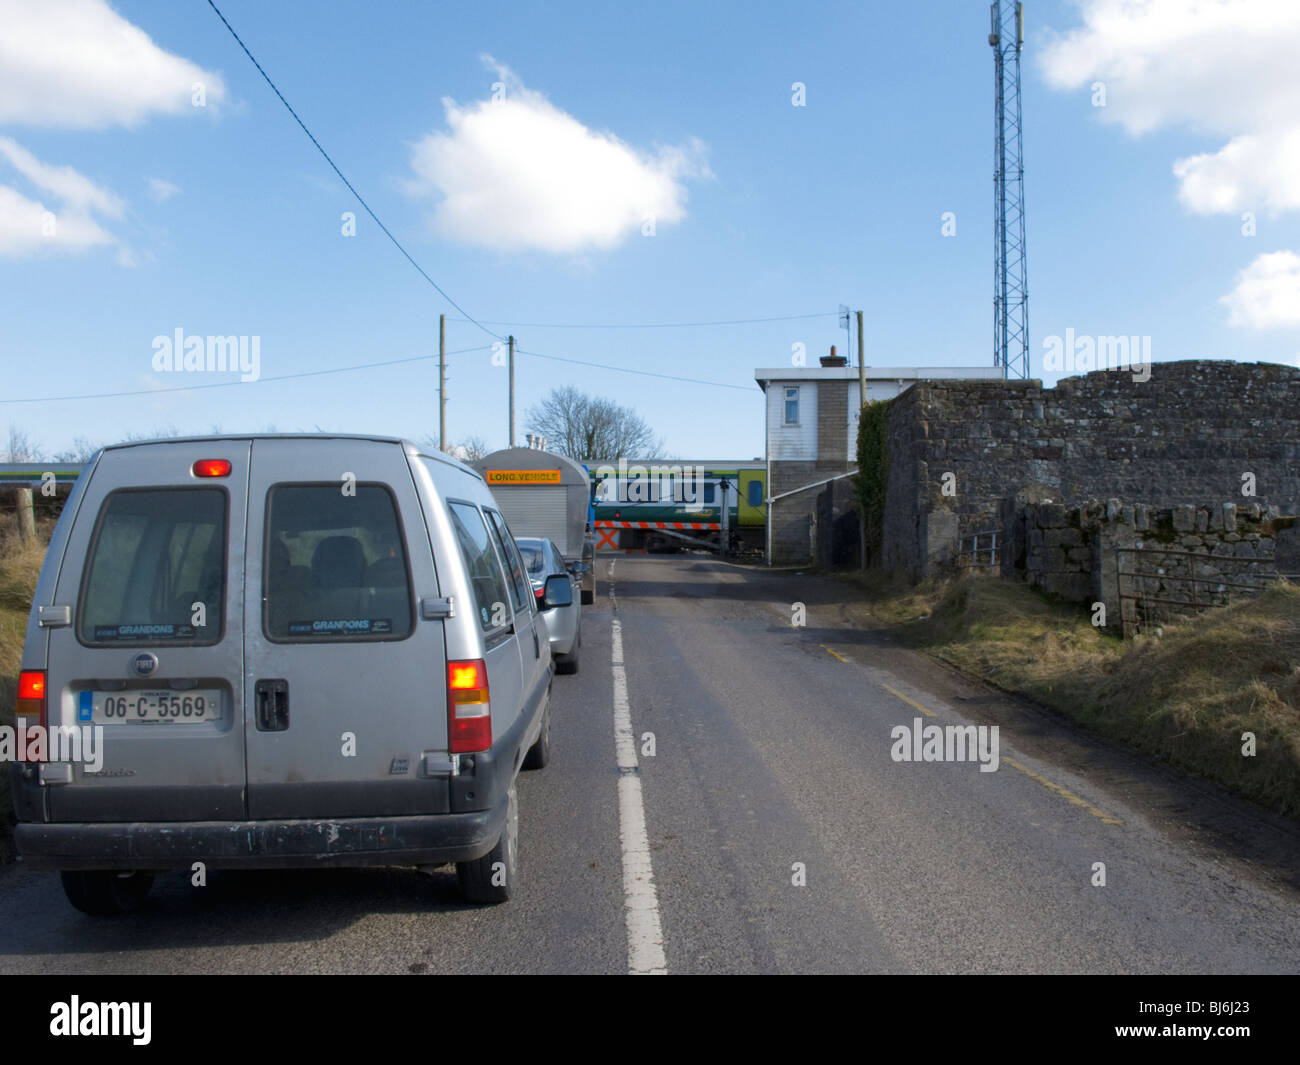 Cars waiting at Level Crossing, County Limerick Ireland Stock Photo